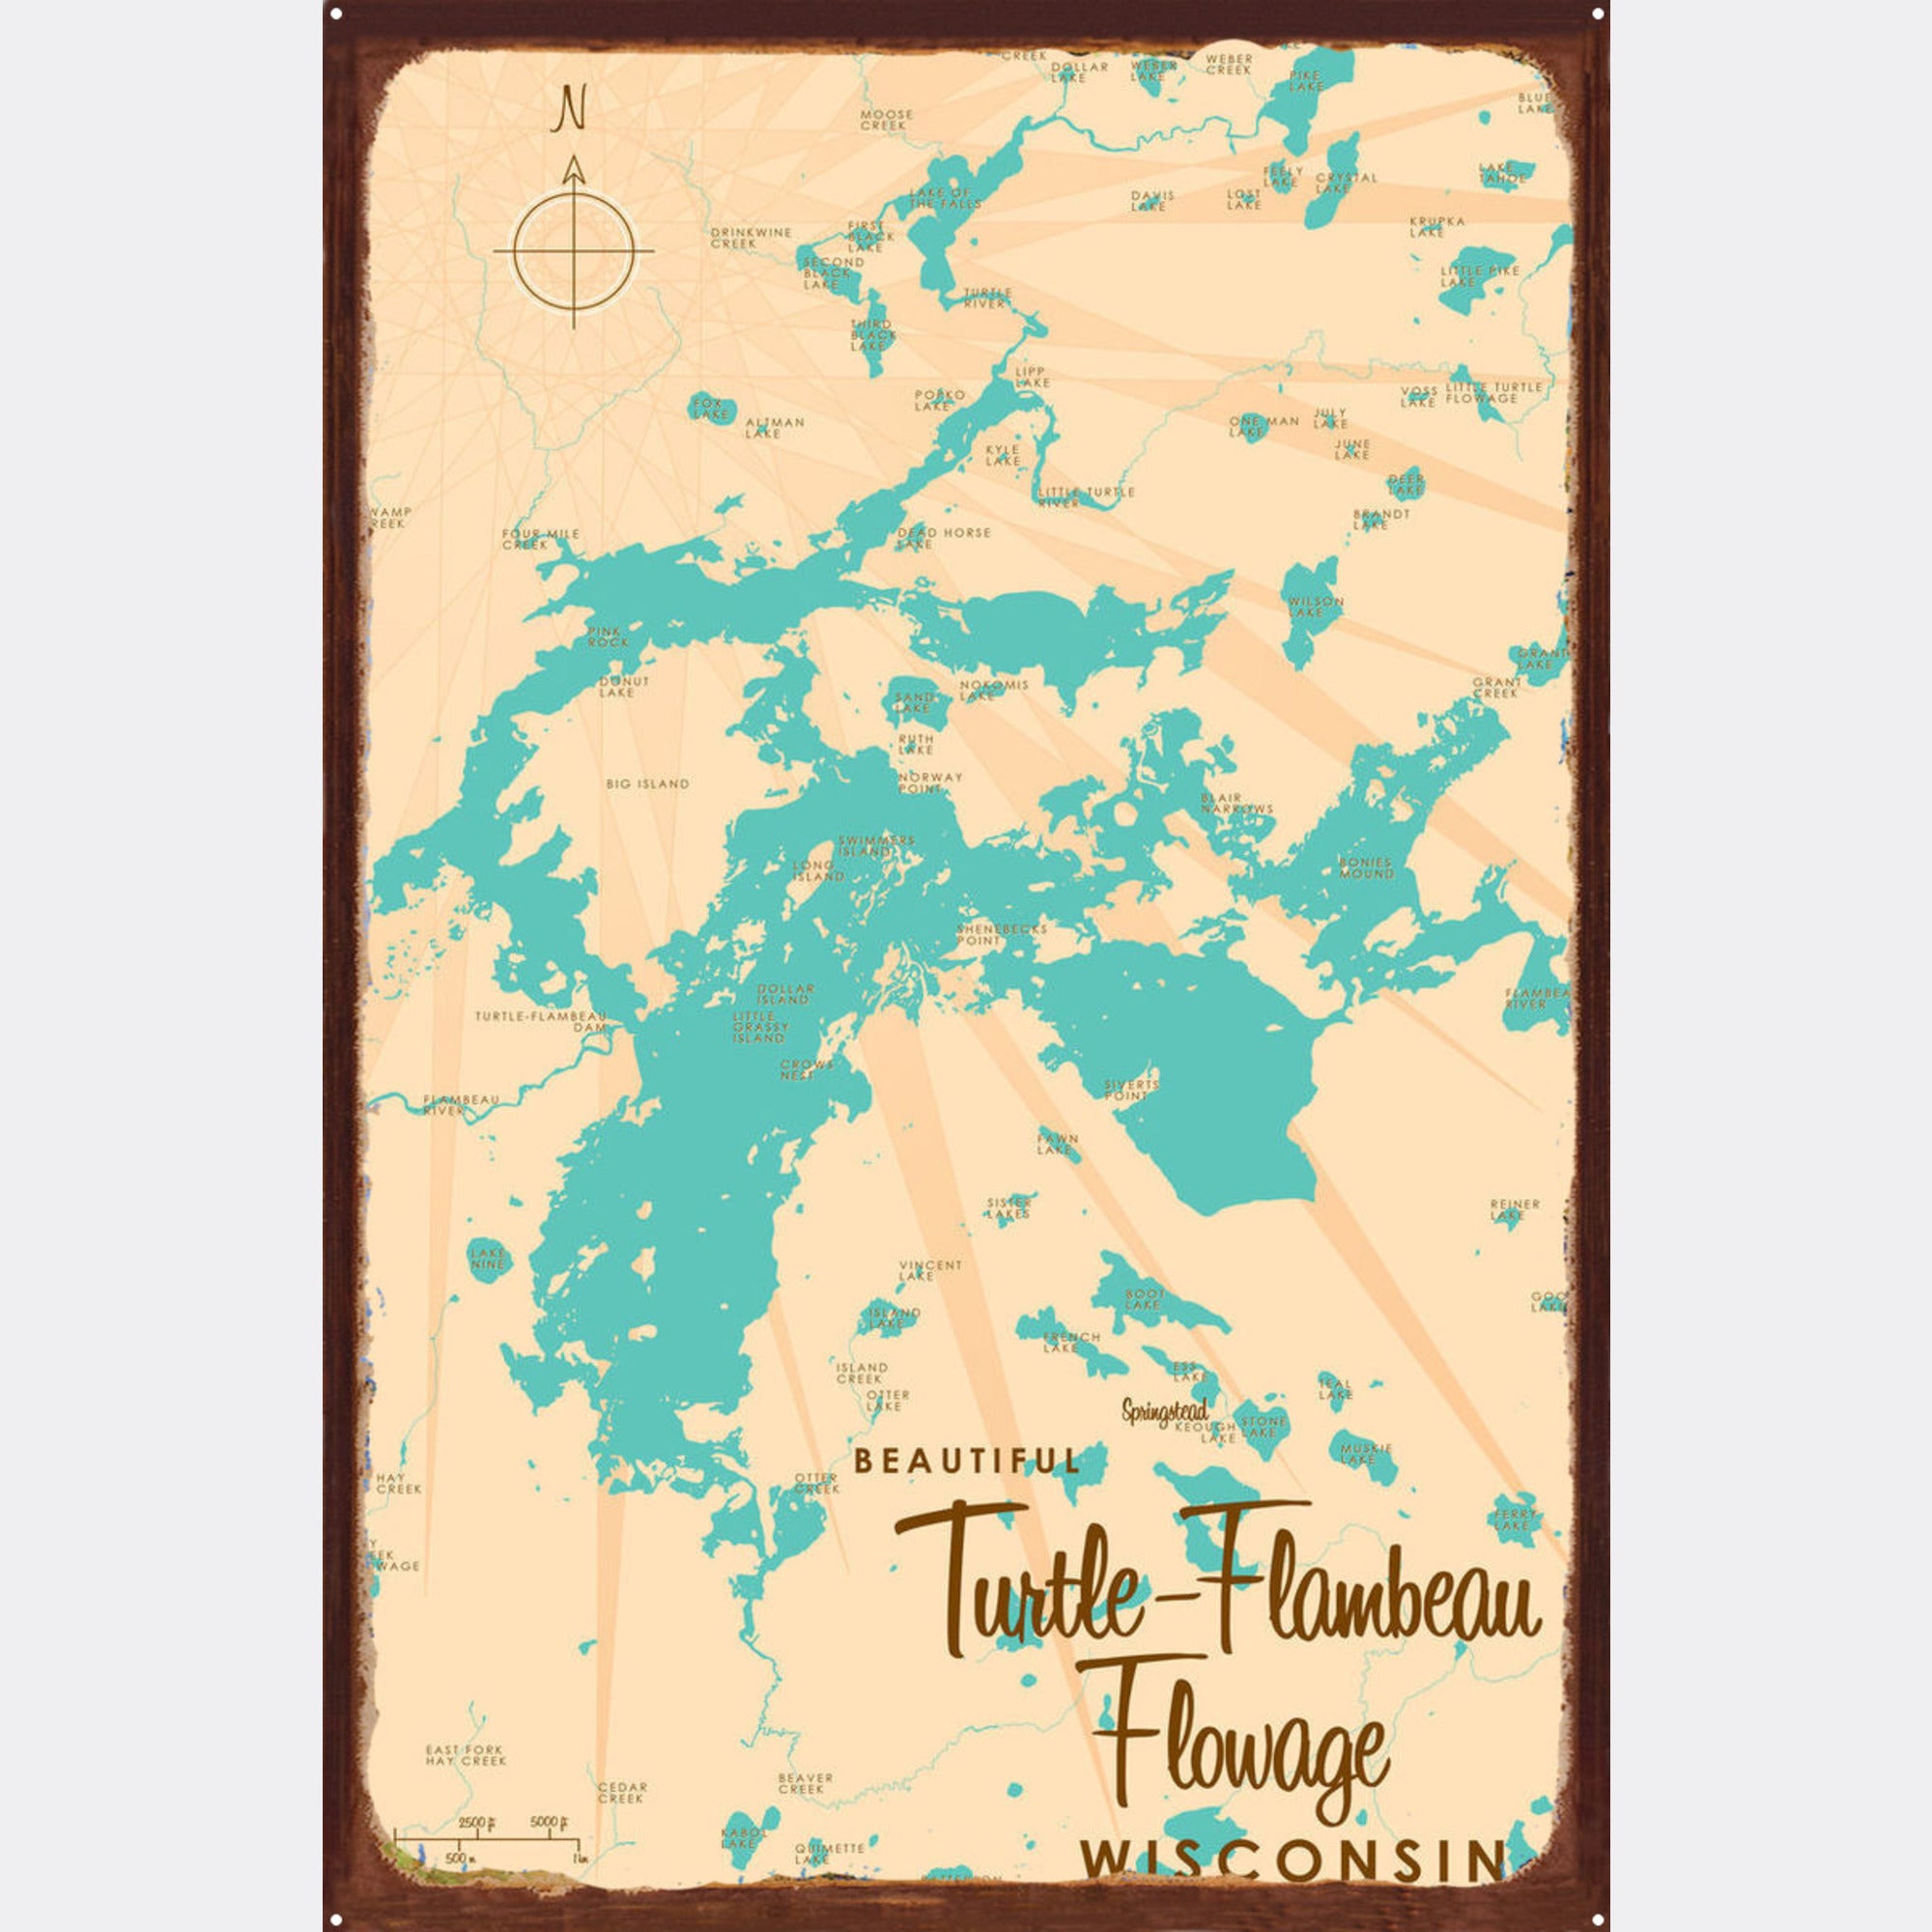 Turtle-Flambeau Flowage Wisconsin, Rustic Metal Sign Map Art